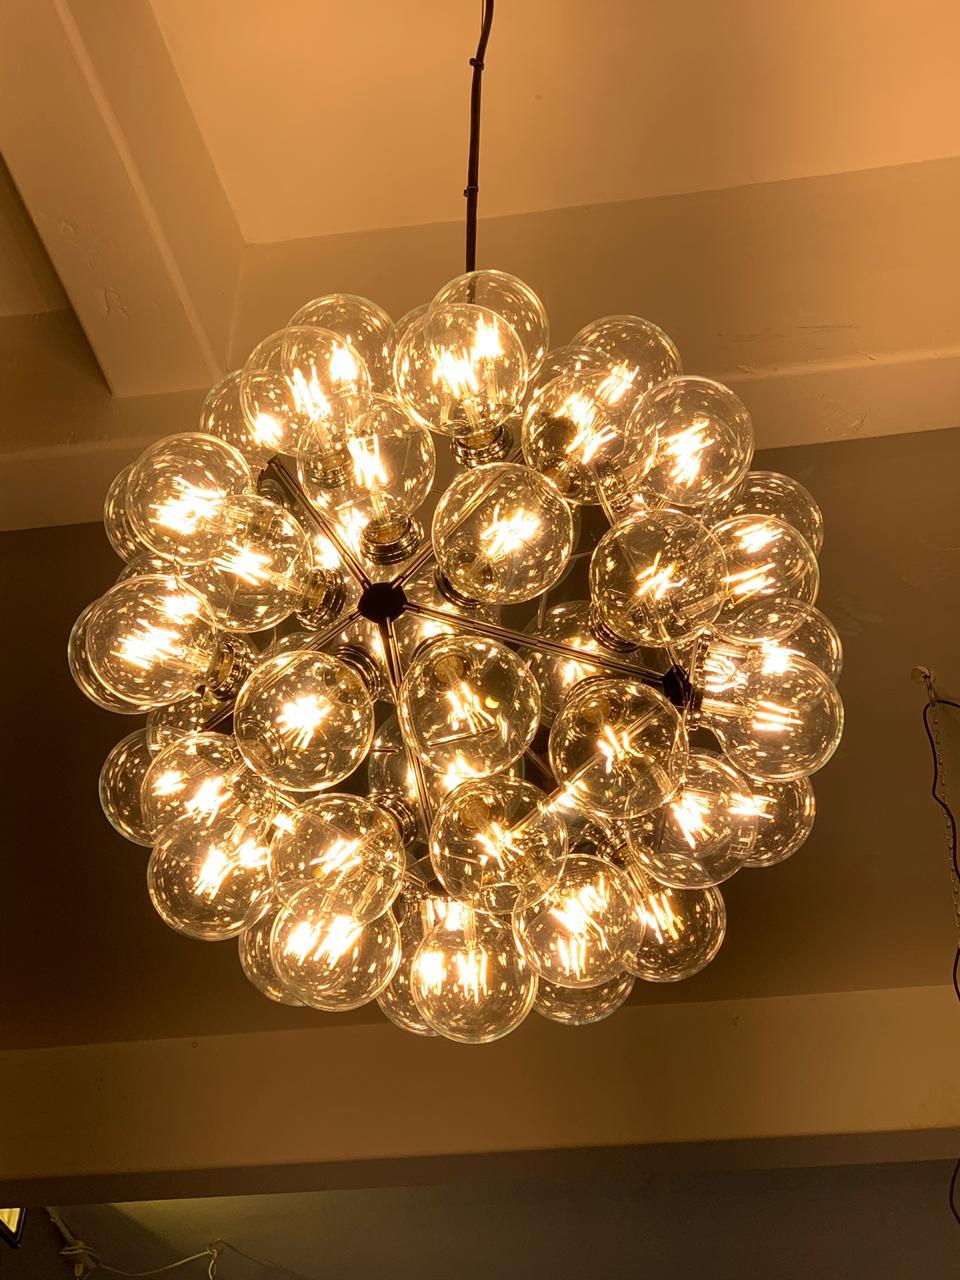 Striking Taraxacum 88 S1 ceiling lamp by Italian designer Achille Castiglioni. The icosahedron shaped design uses 60 LED bulbs.